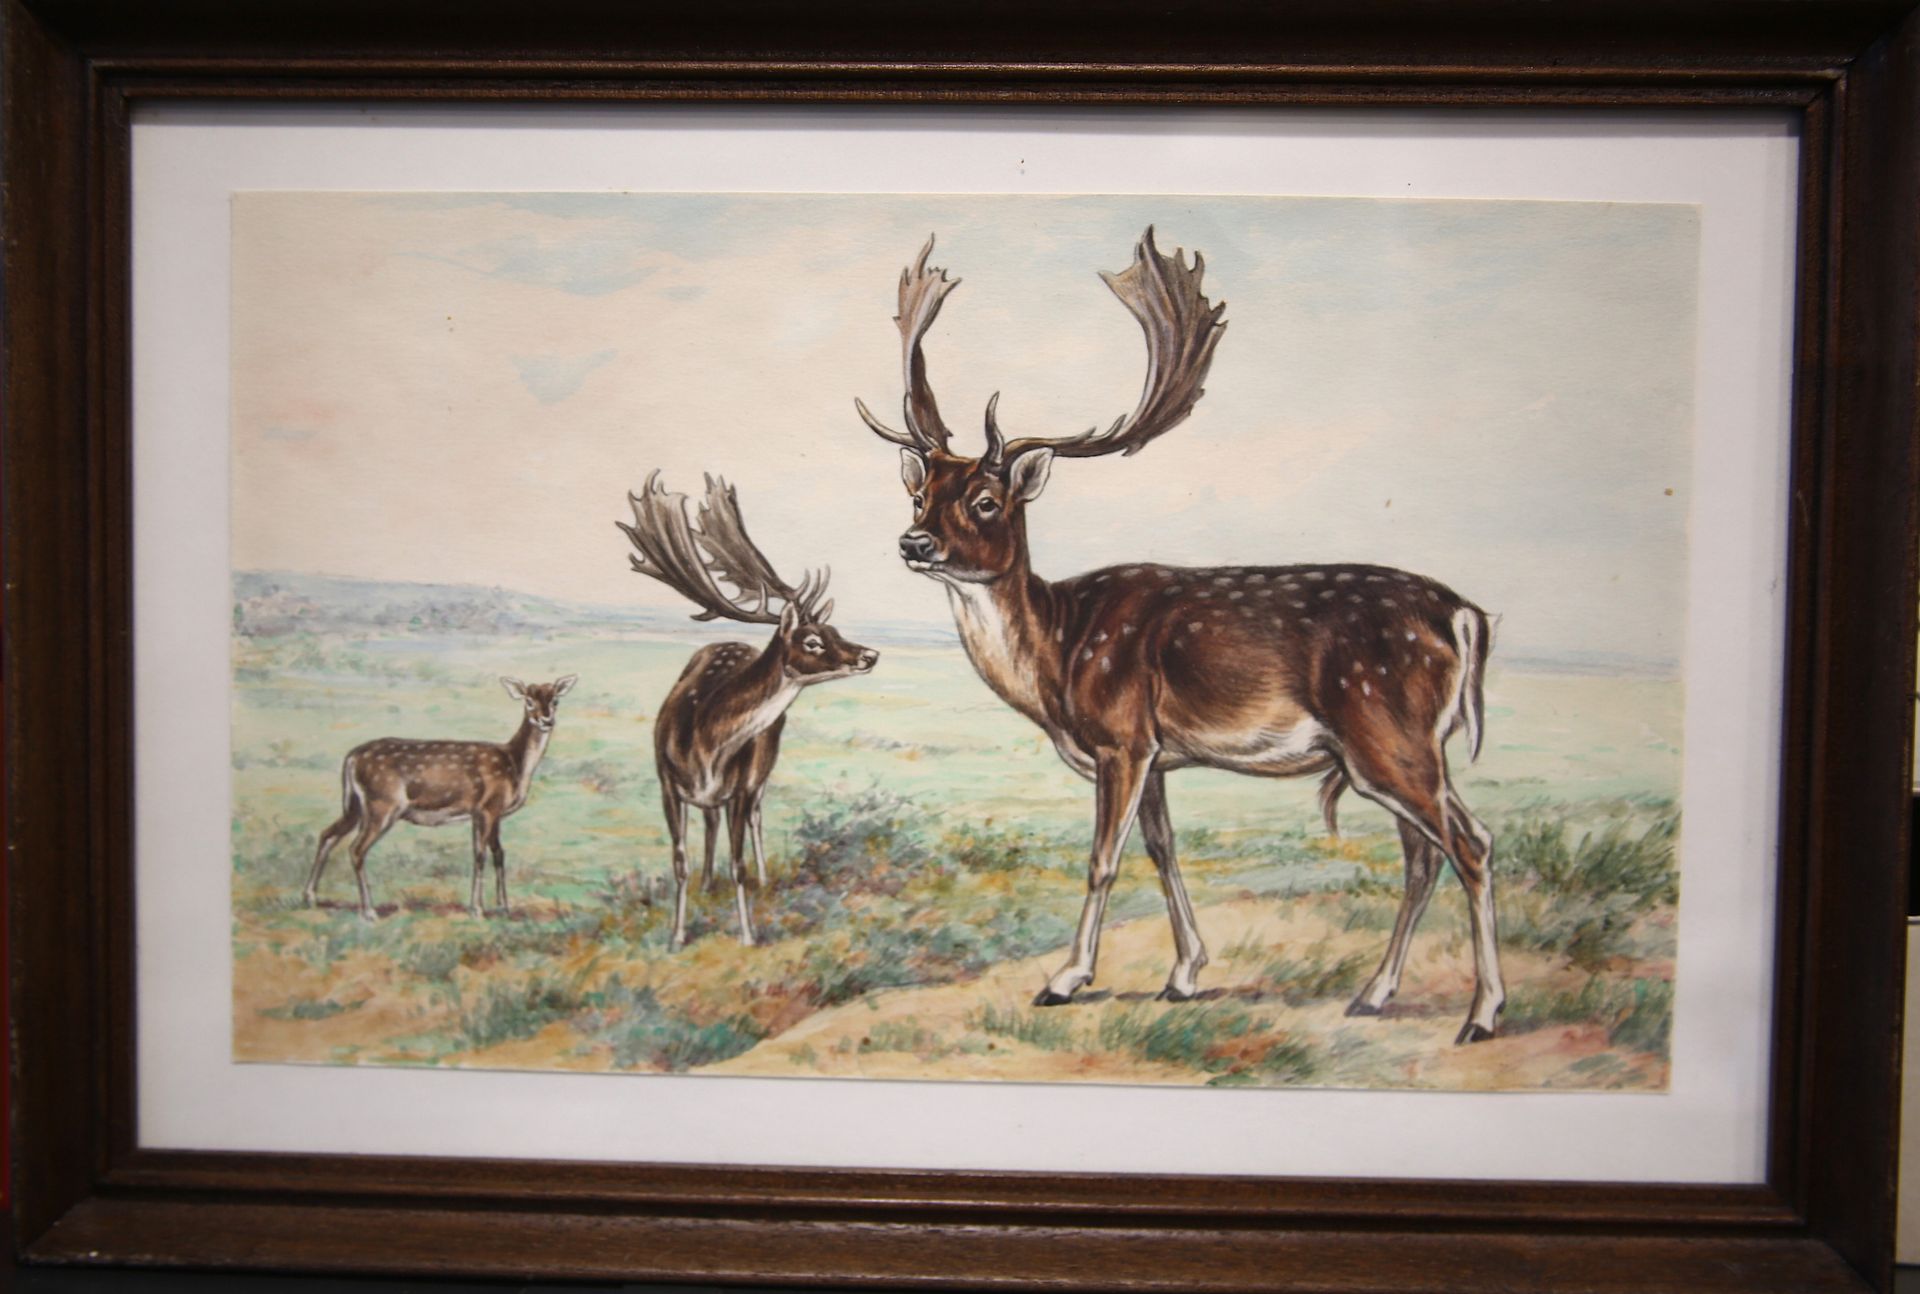 Null 
保罗-马勒（19世纪末-20世纪初），归功于

"一对雄鹿和它们的孩子"

无署名水粉画，带框

尺寸：18.5 x 29.5厘米